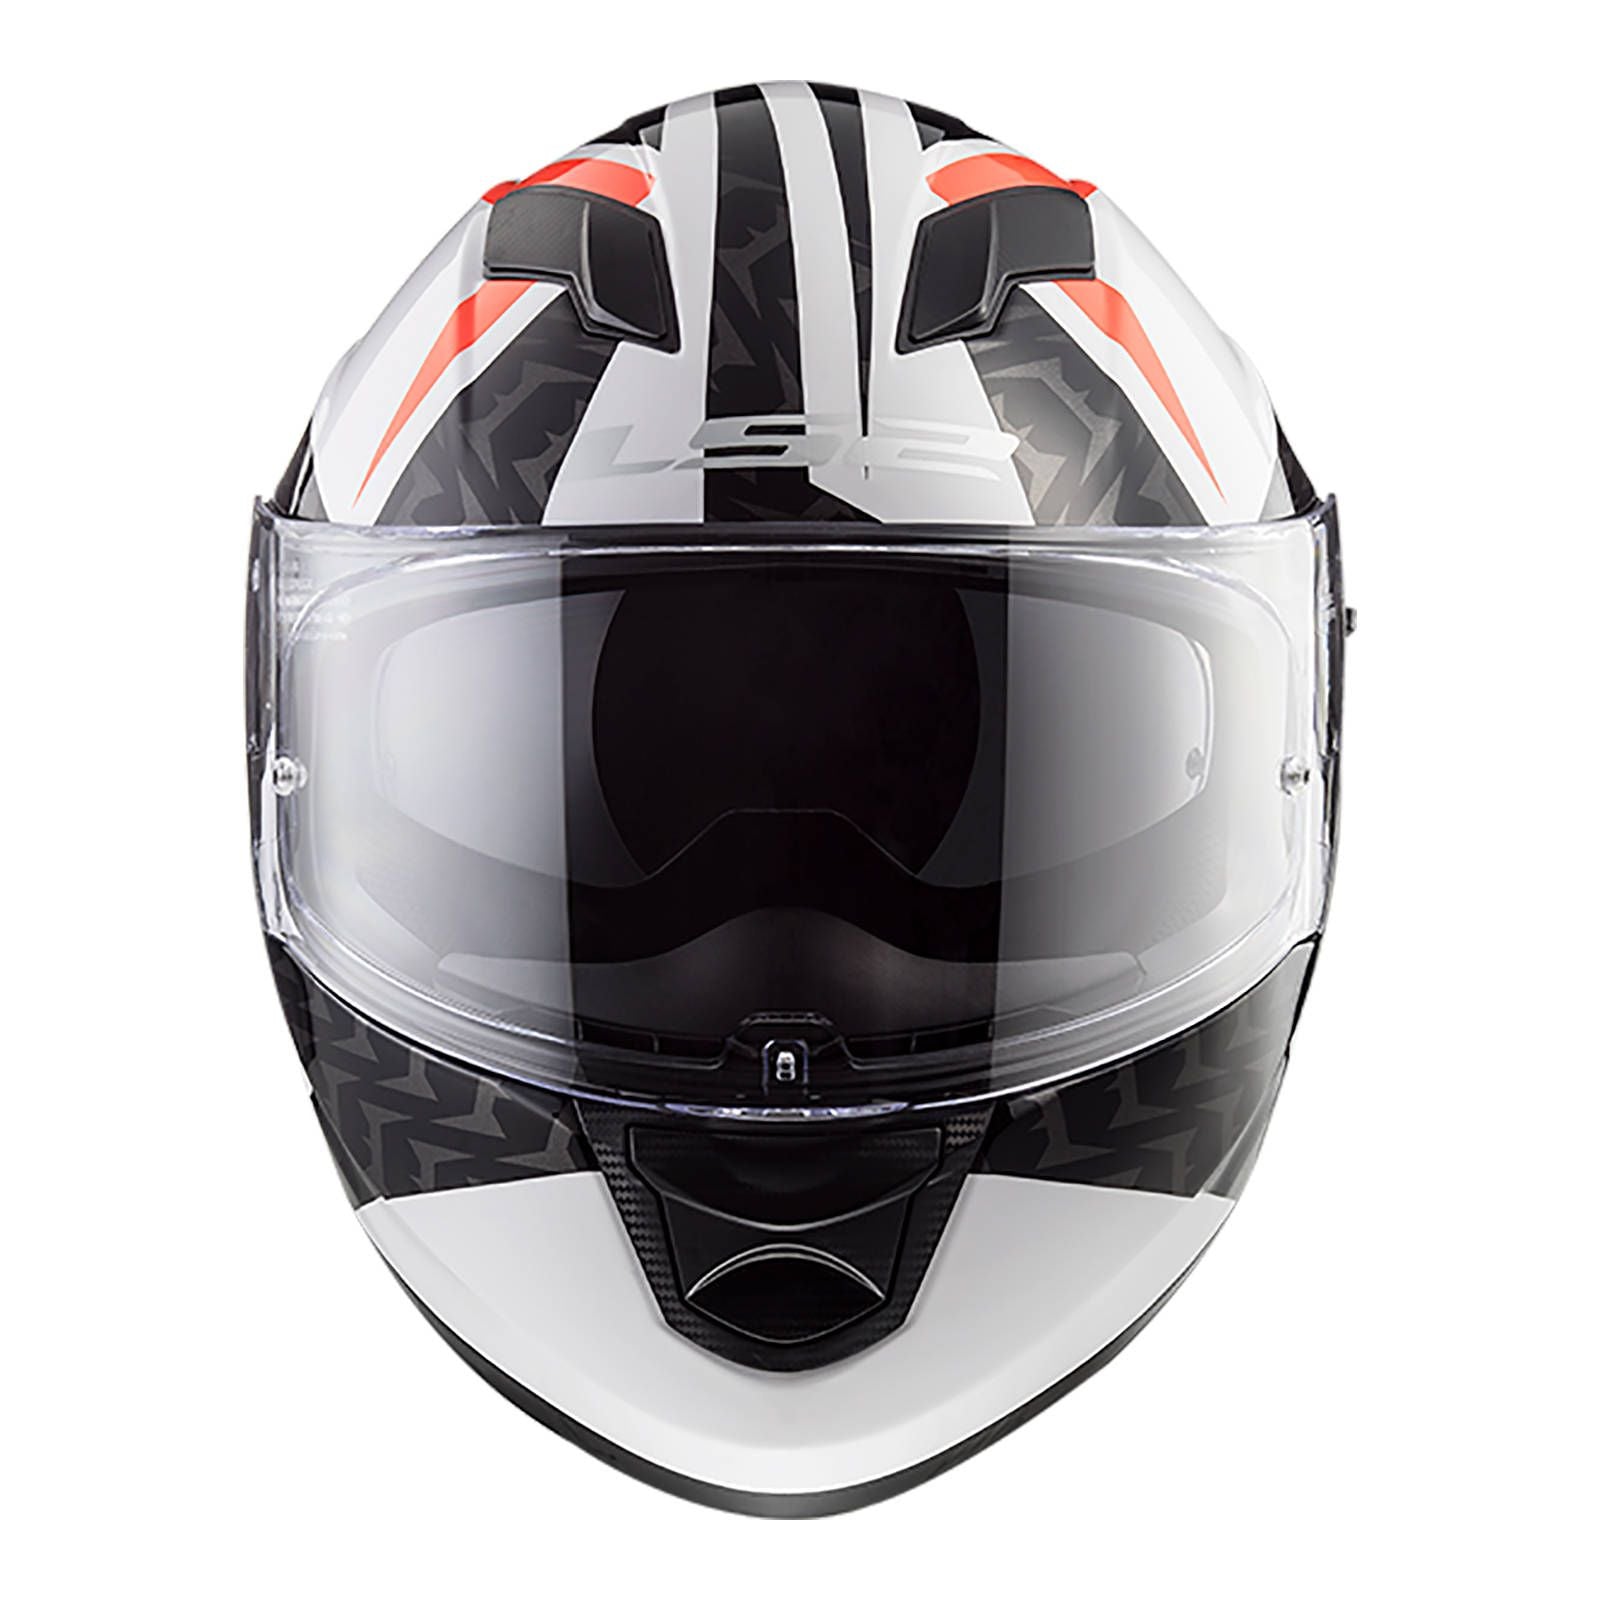 LS2 FF320 Stream EVO Commander Helmet - White / Black / Red (S) #LS2FF320COMWBRS